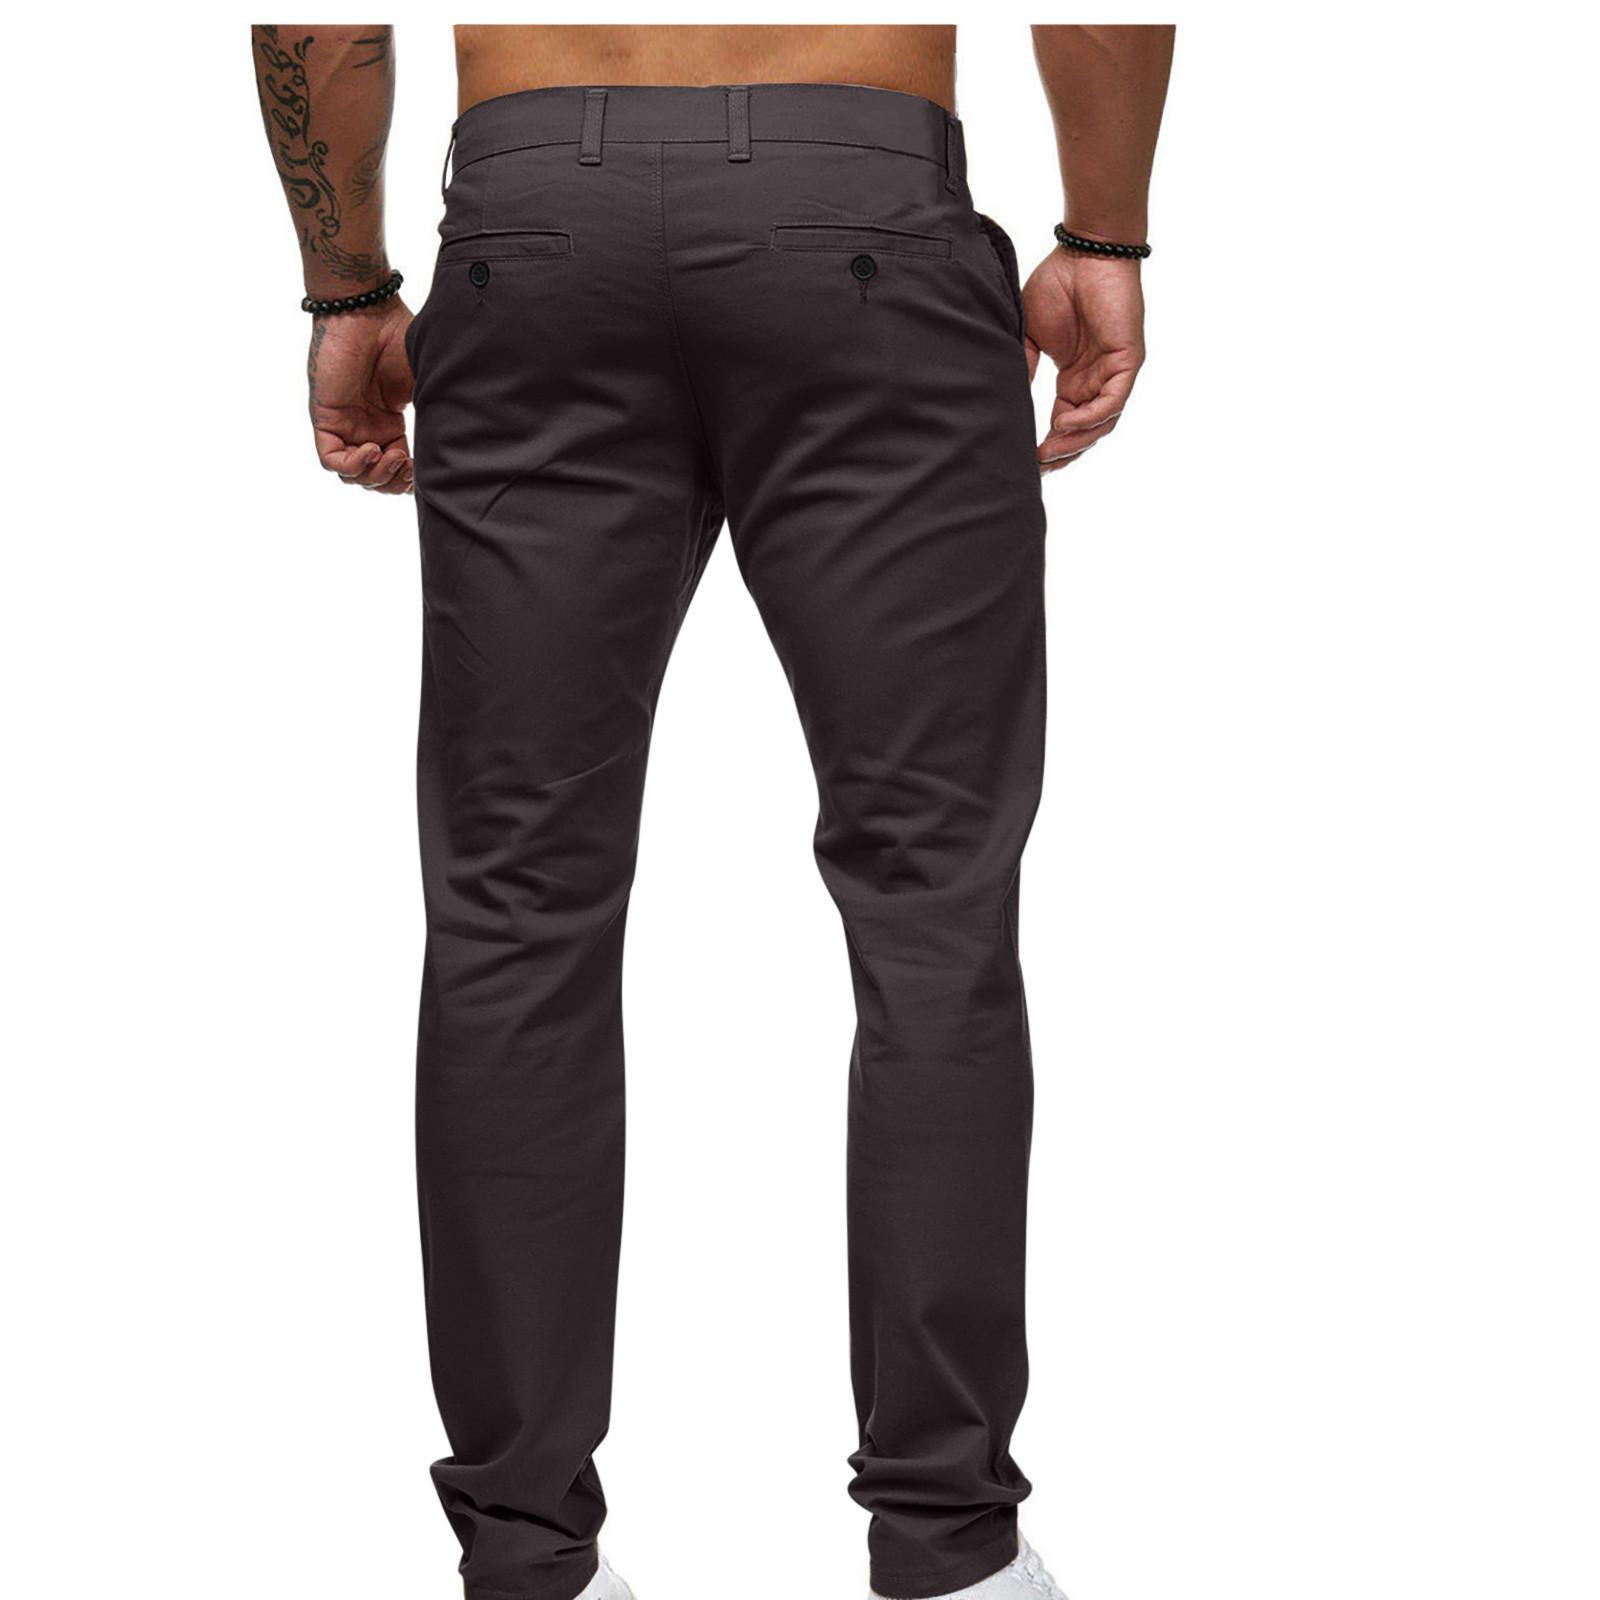 DeHolifer Mens Casual Chinos Pants Cotton Slacks Elastic Waistband Classic Fit Flat Front Khaki Pant Dark Gray 3XL - image 5 of 5